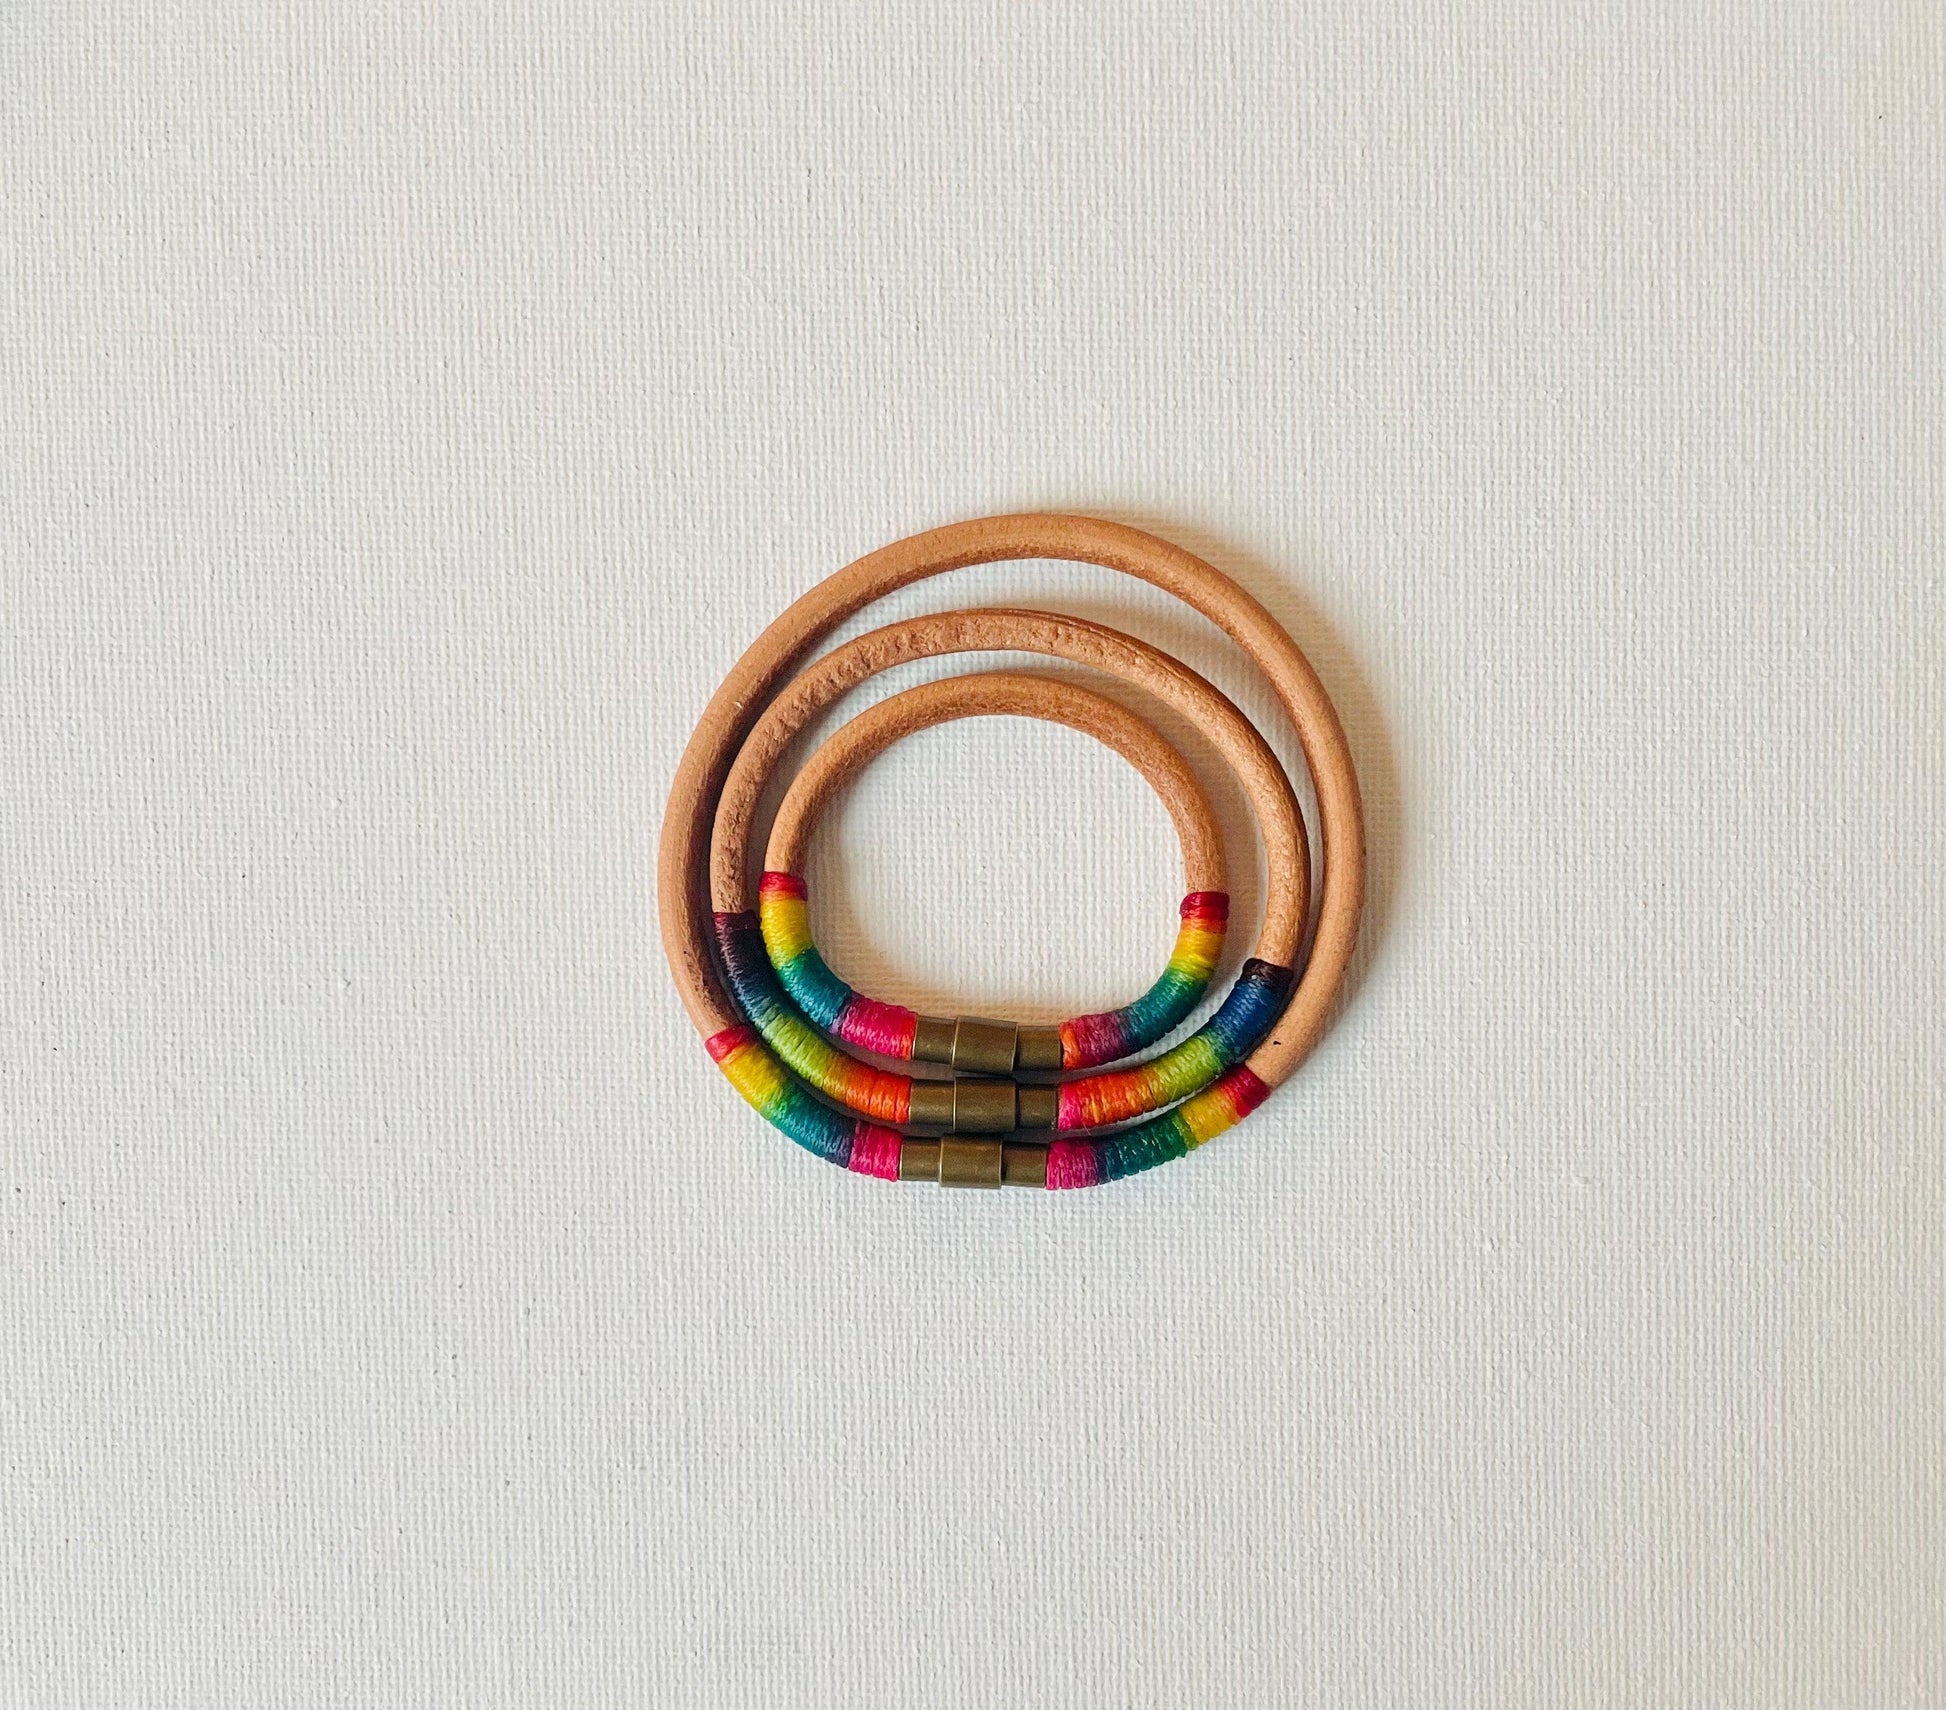 Leather Family Bracelet Set for 3 with rainbow colorsBraceletsBeachPerfect.de